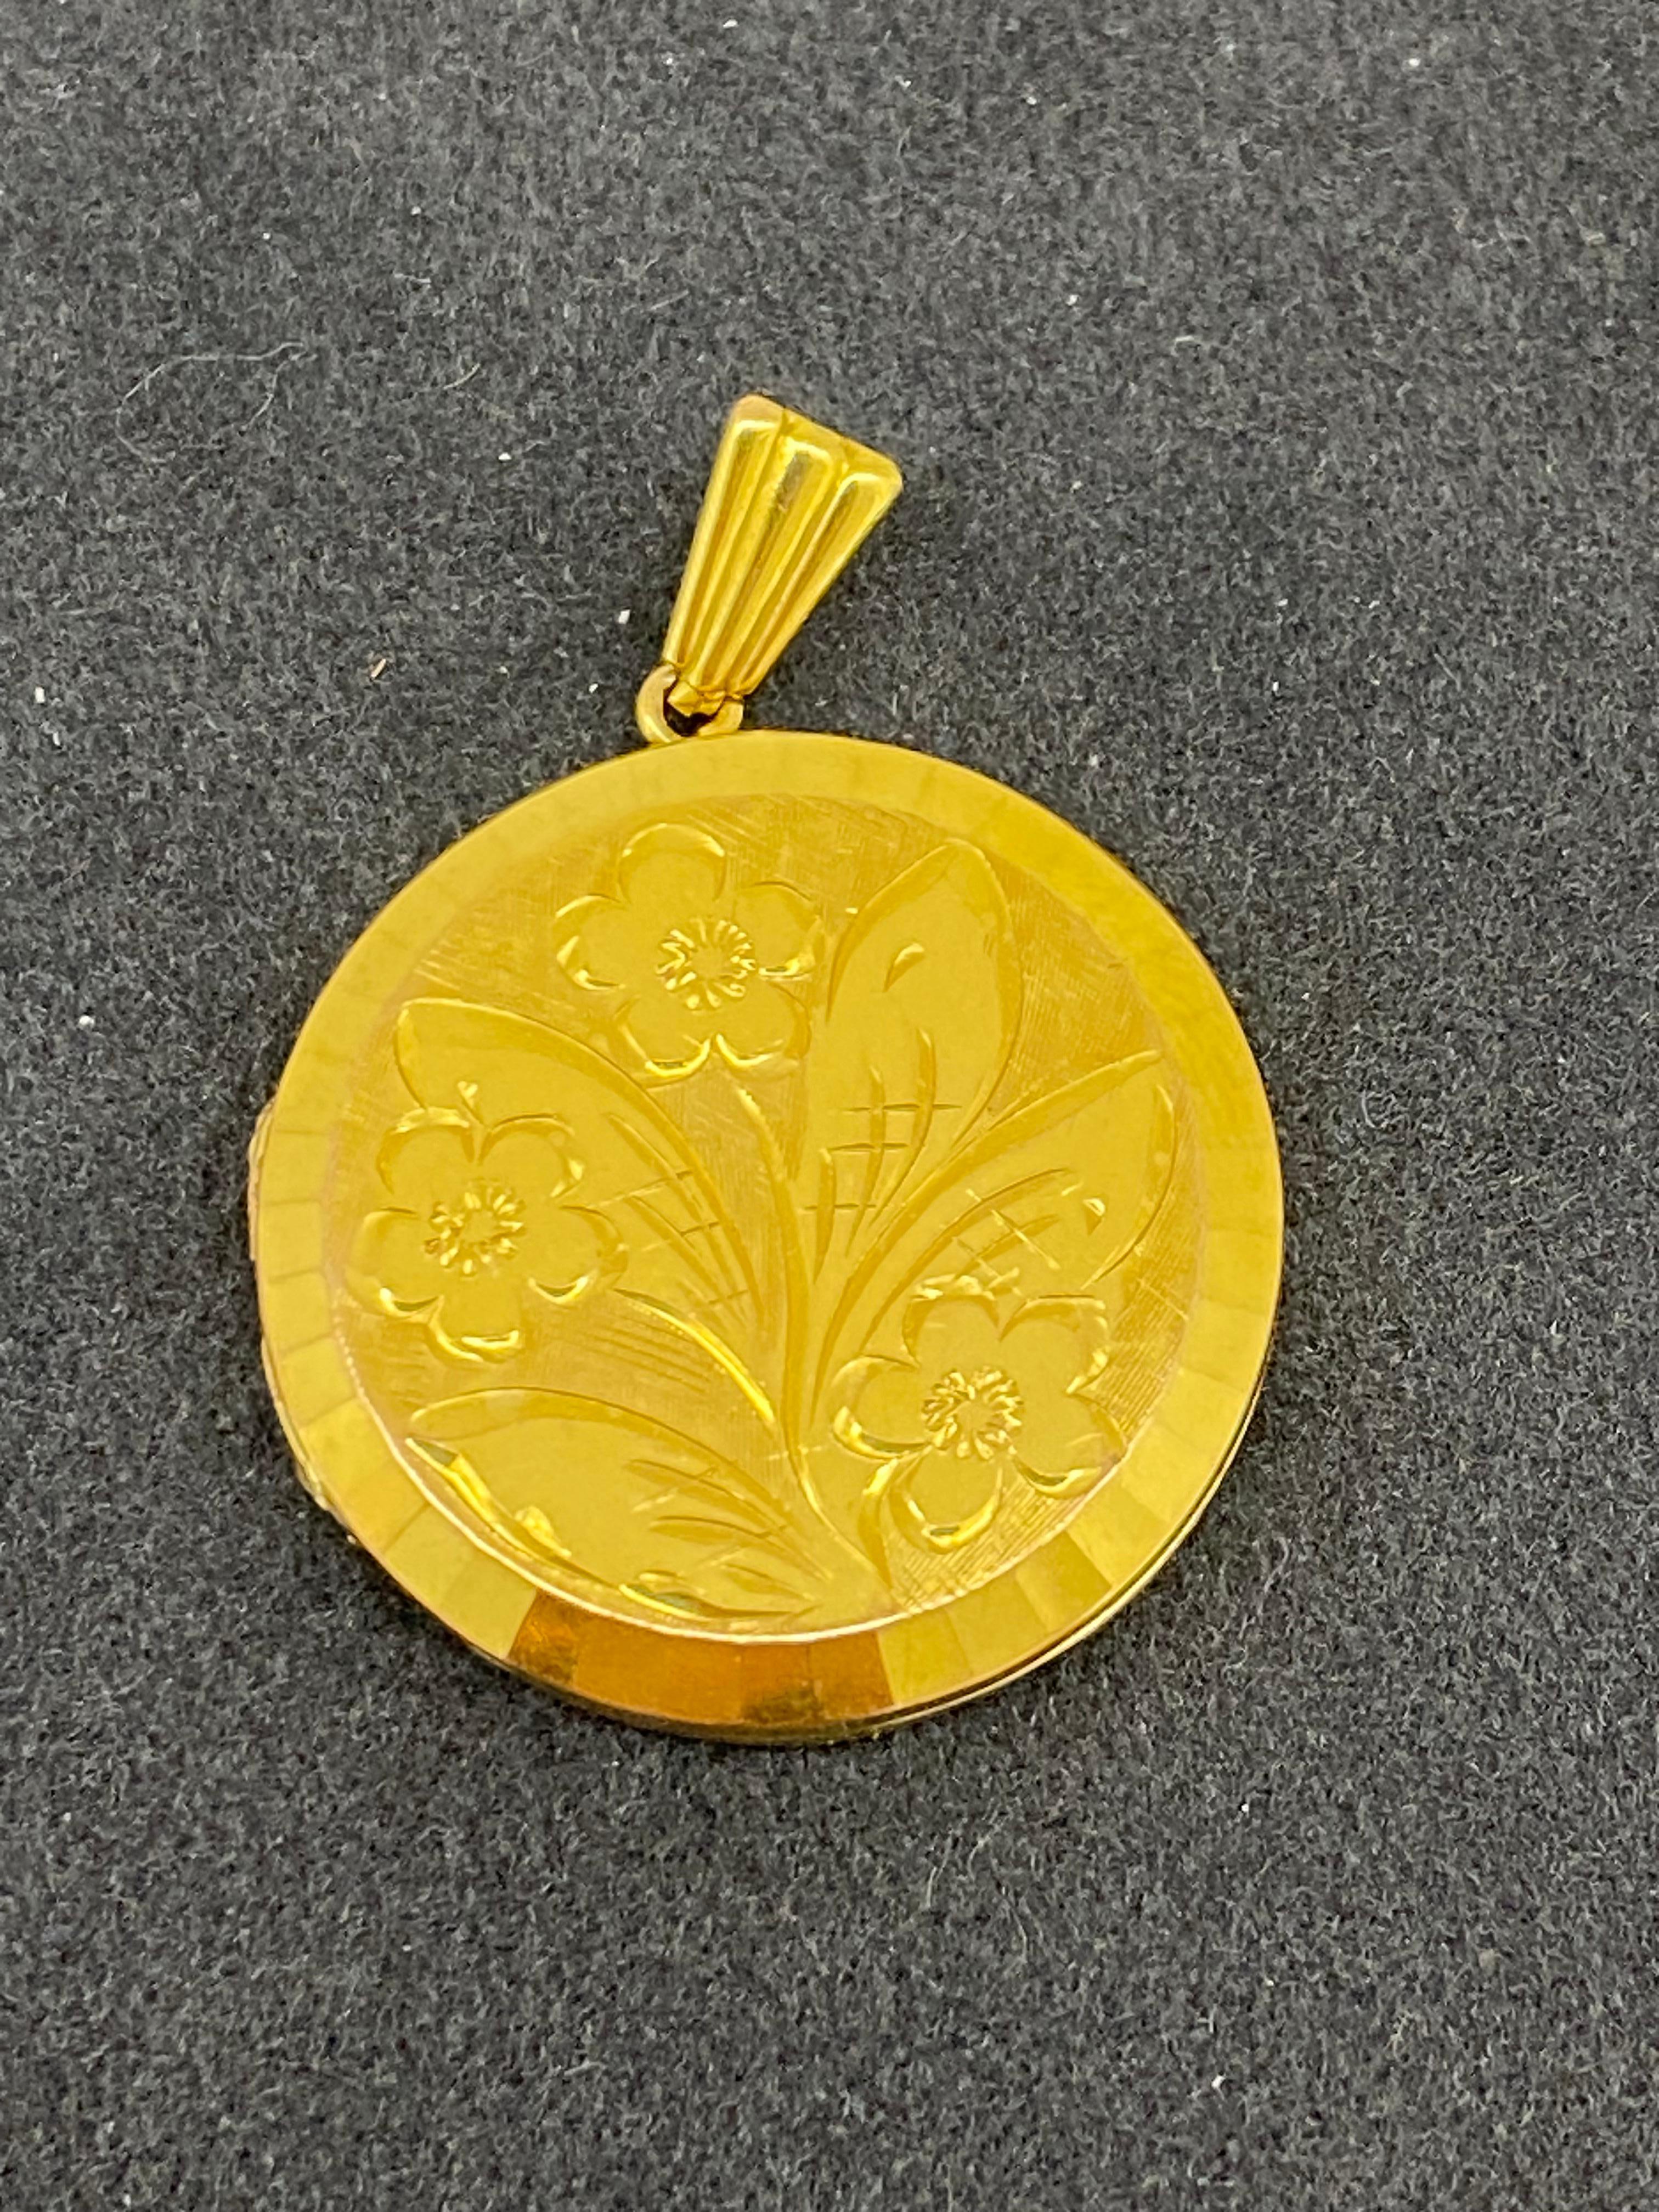 Vintage c1970's English 9K Yellow Gold Engraved in Floral Motif Round Locket